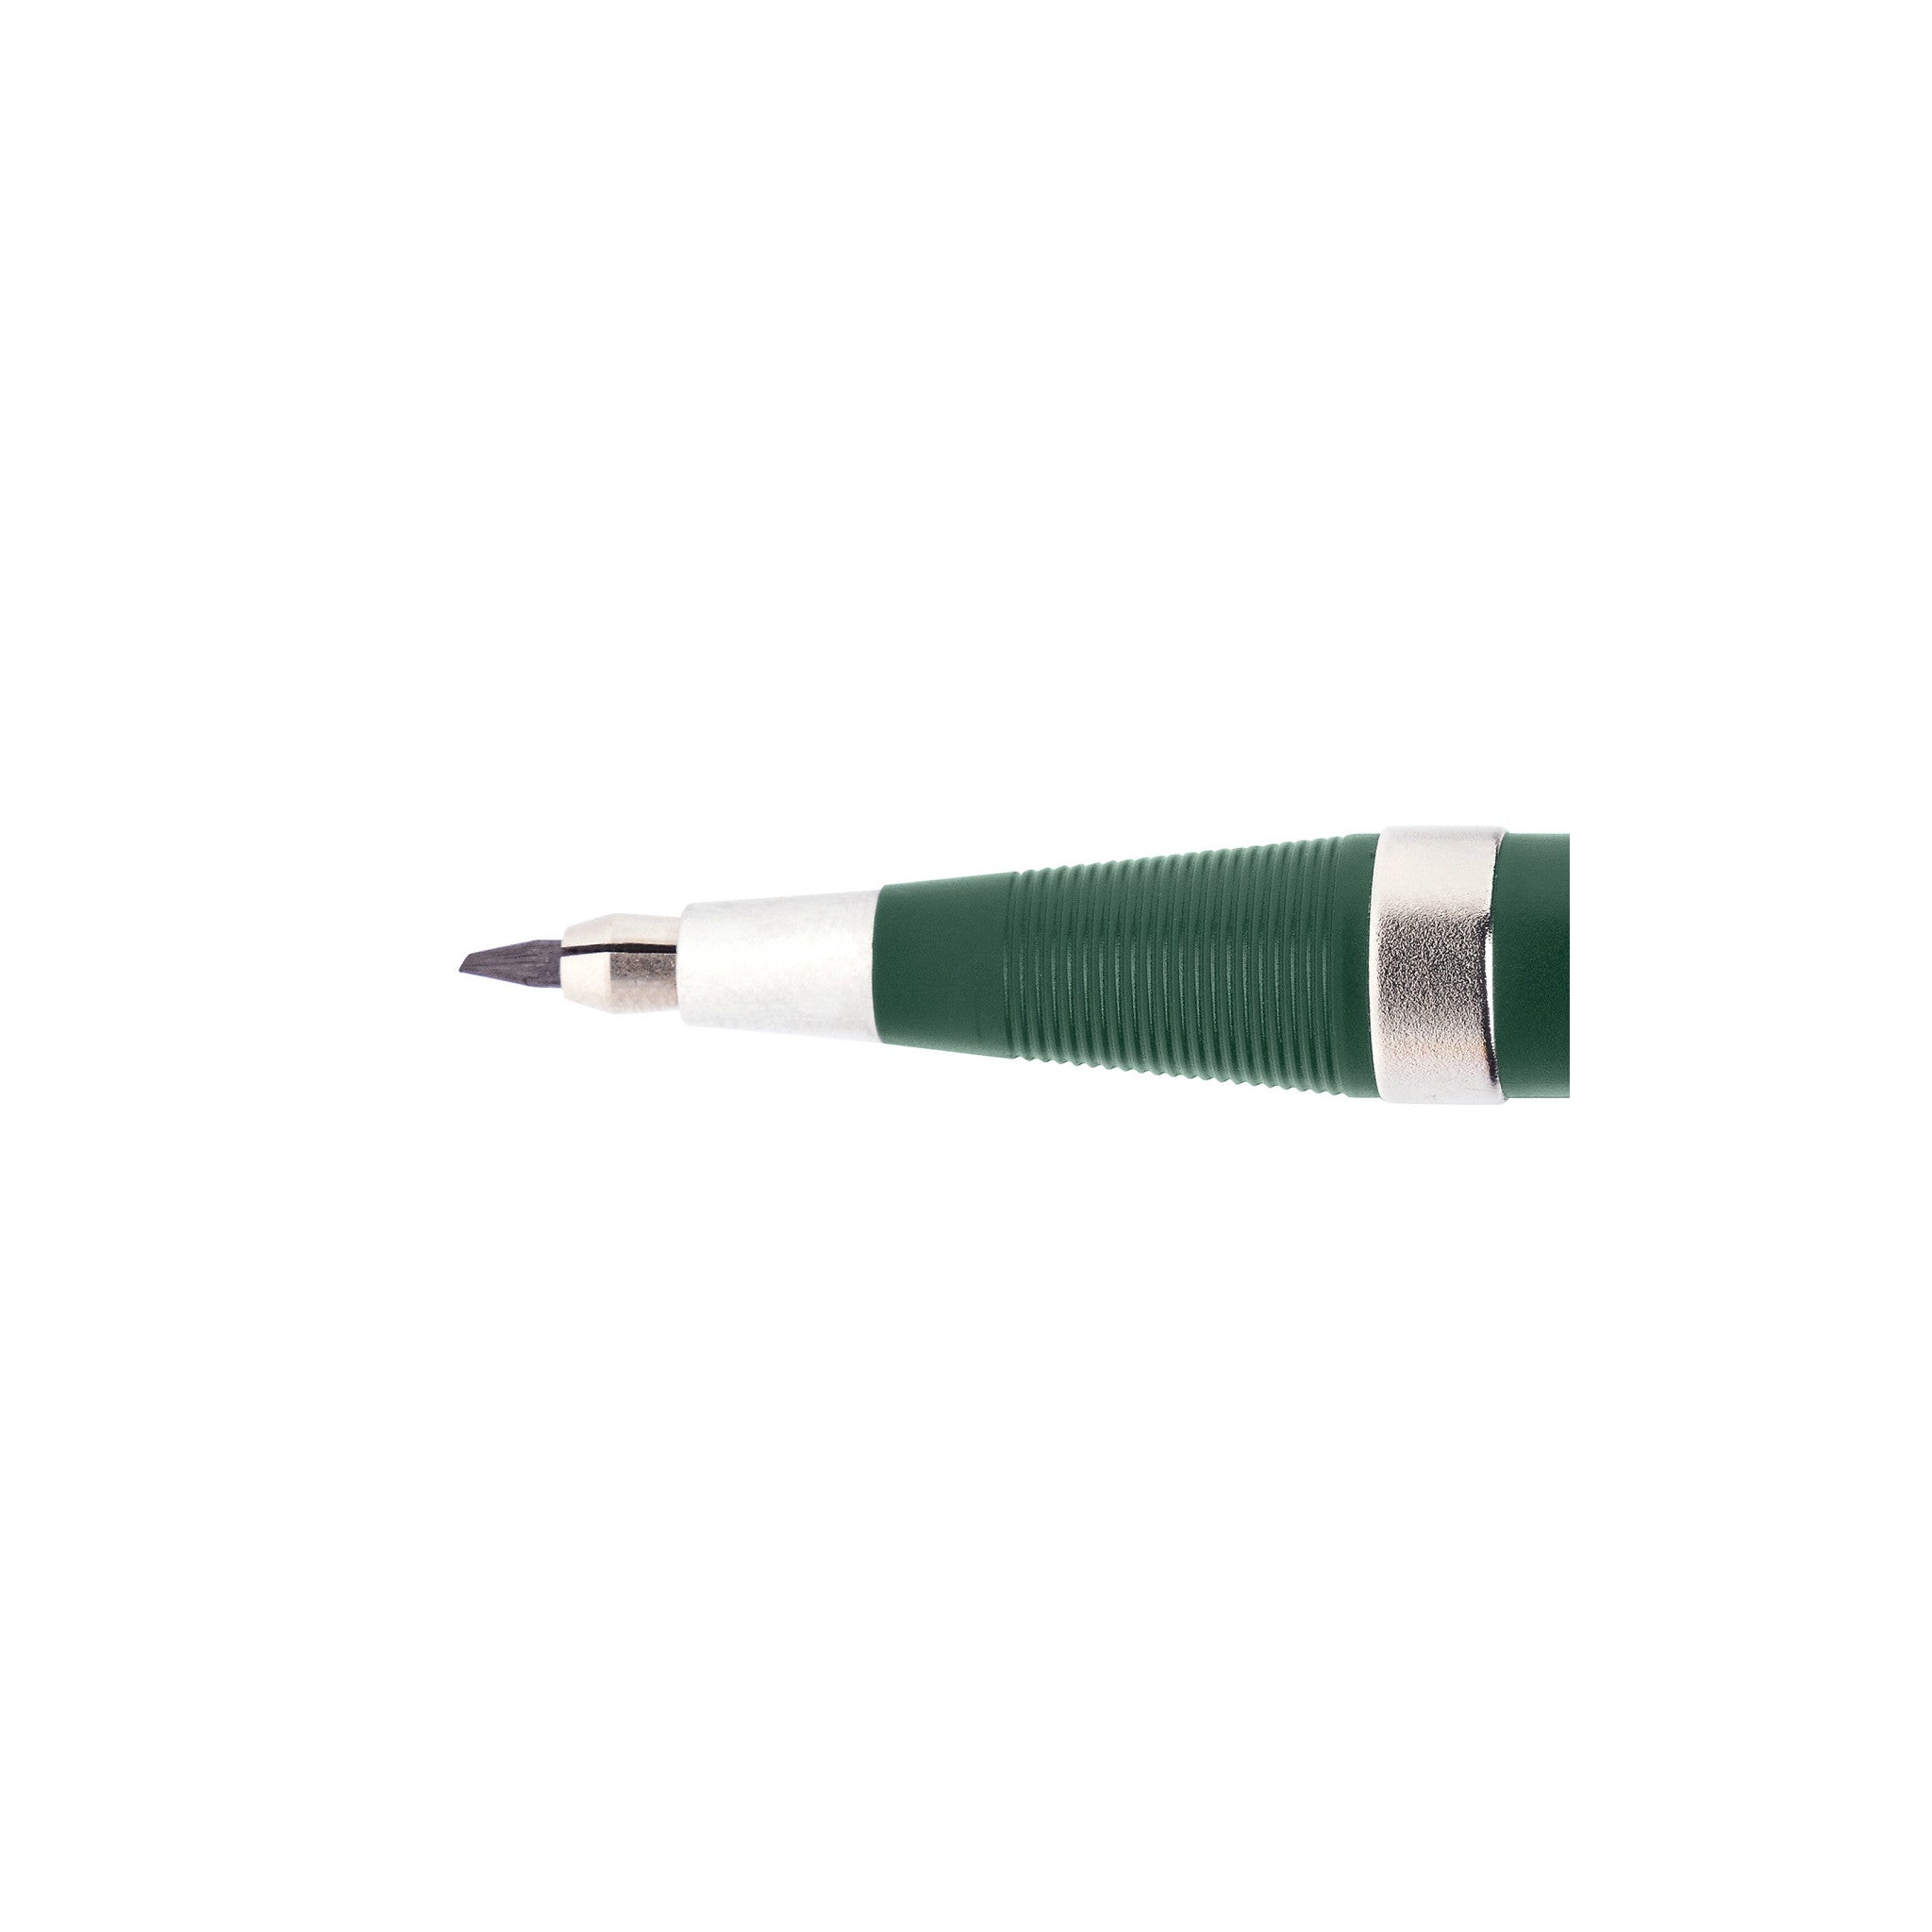 TK 9400 2mm Clutch Pencil Repaper Edition - #REPUCPE01